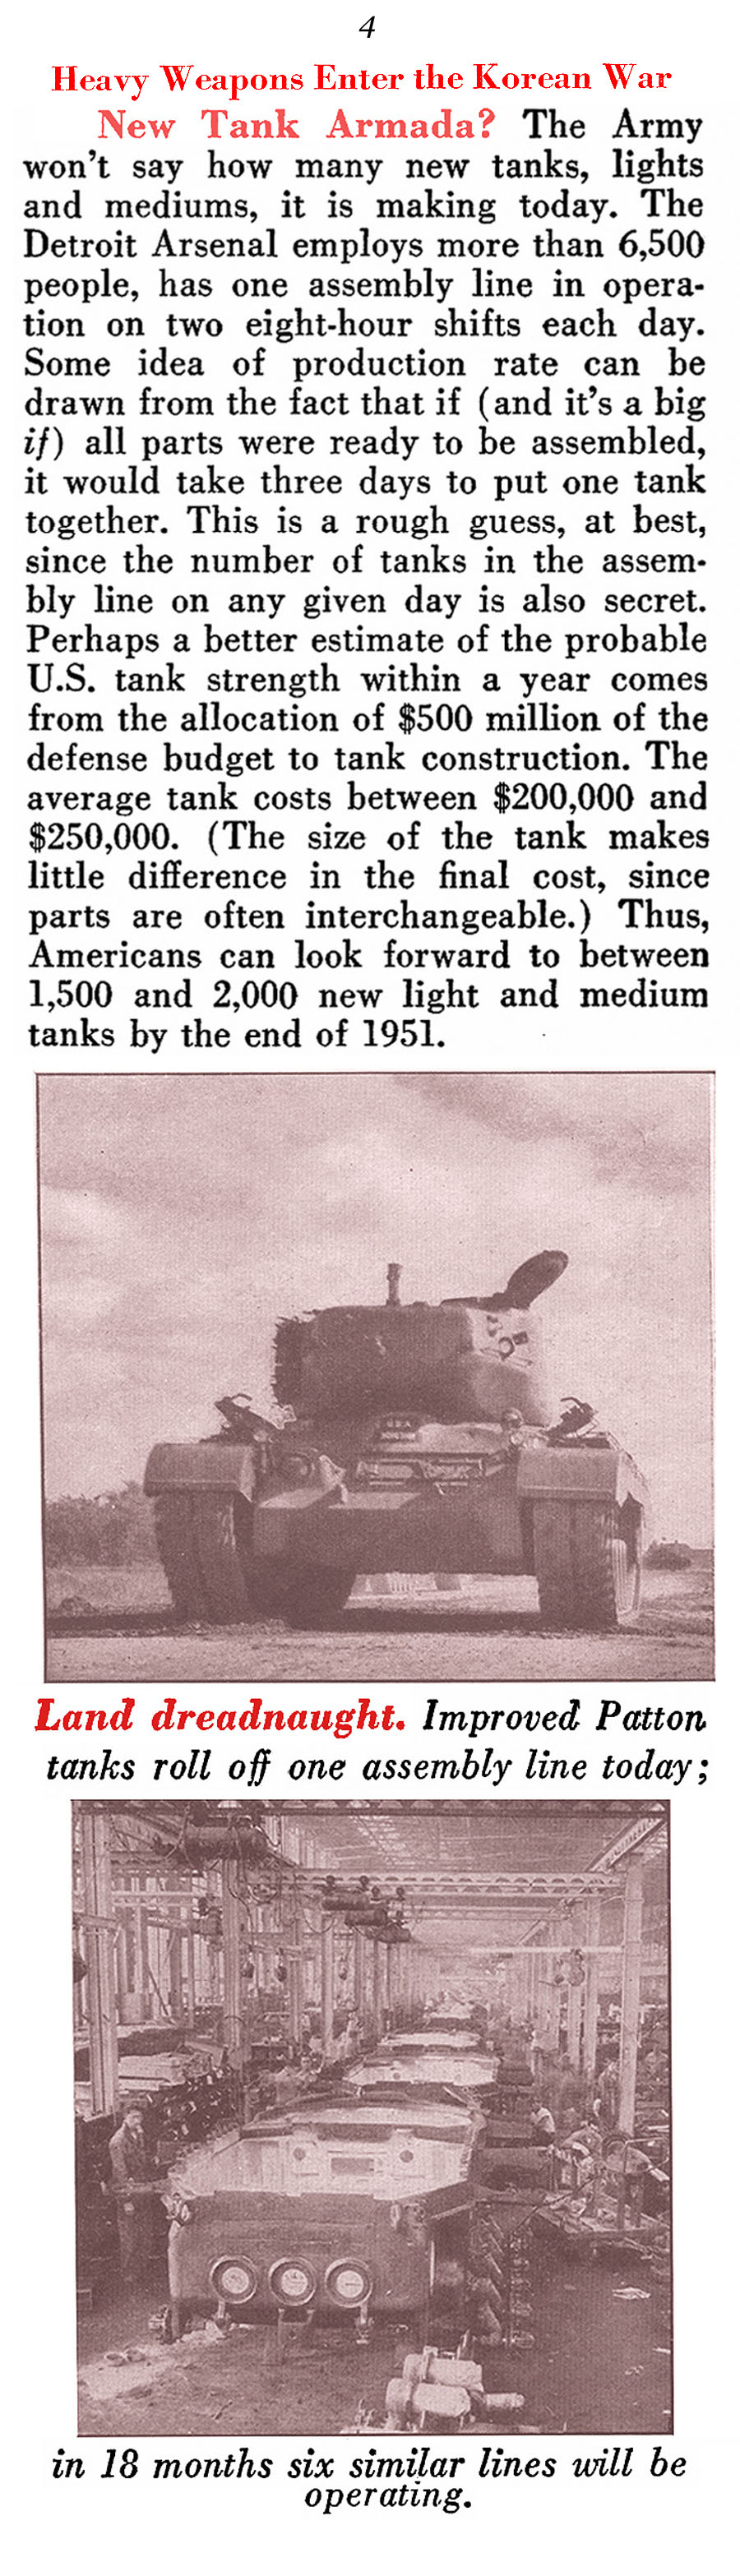 The Patton Tank (Pathfinder Magazine, 1950)